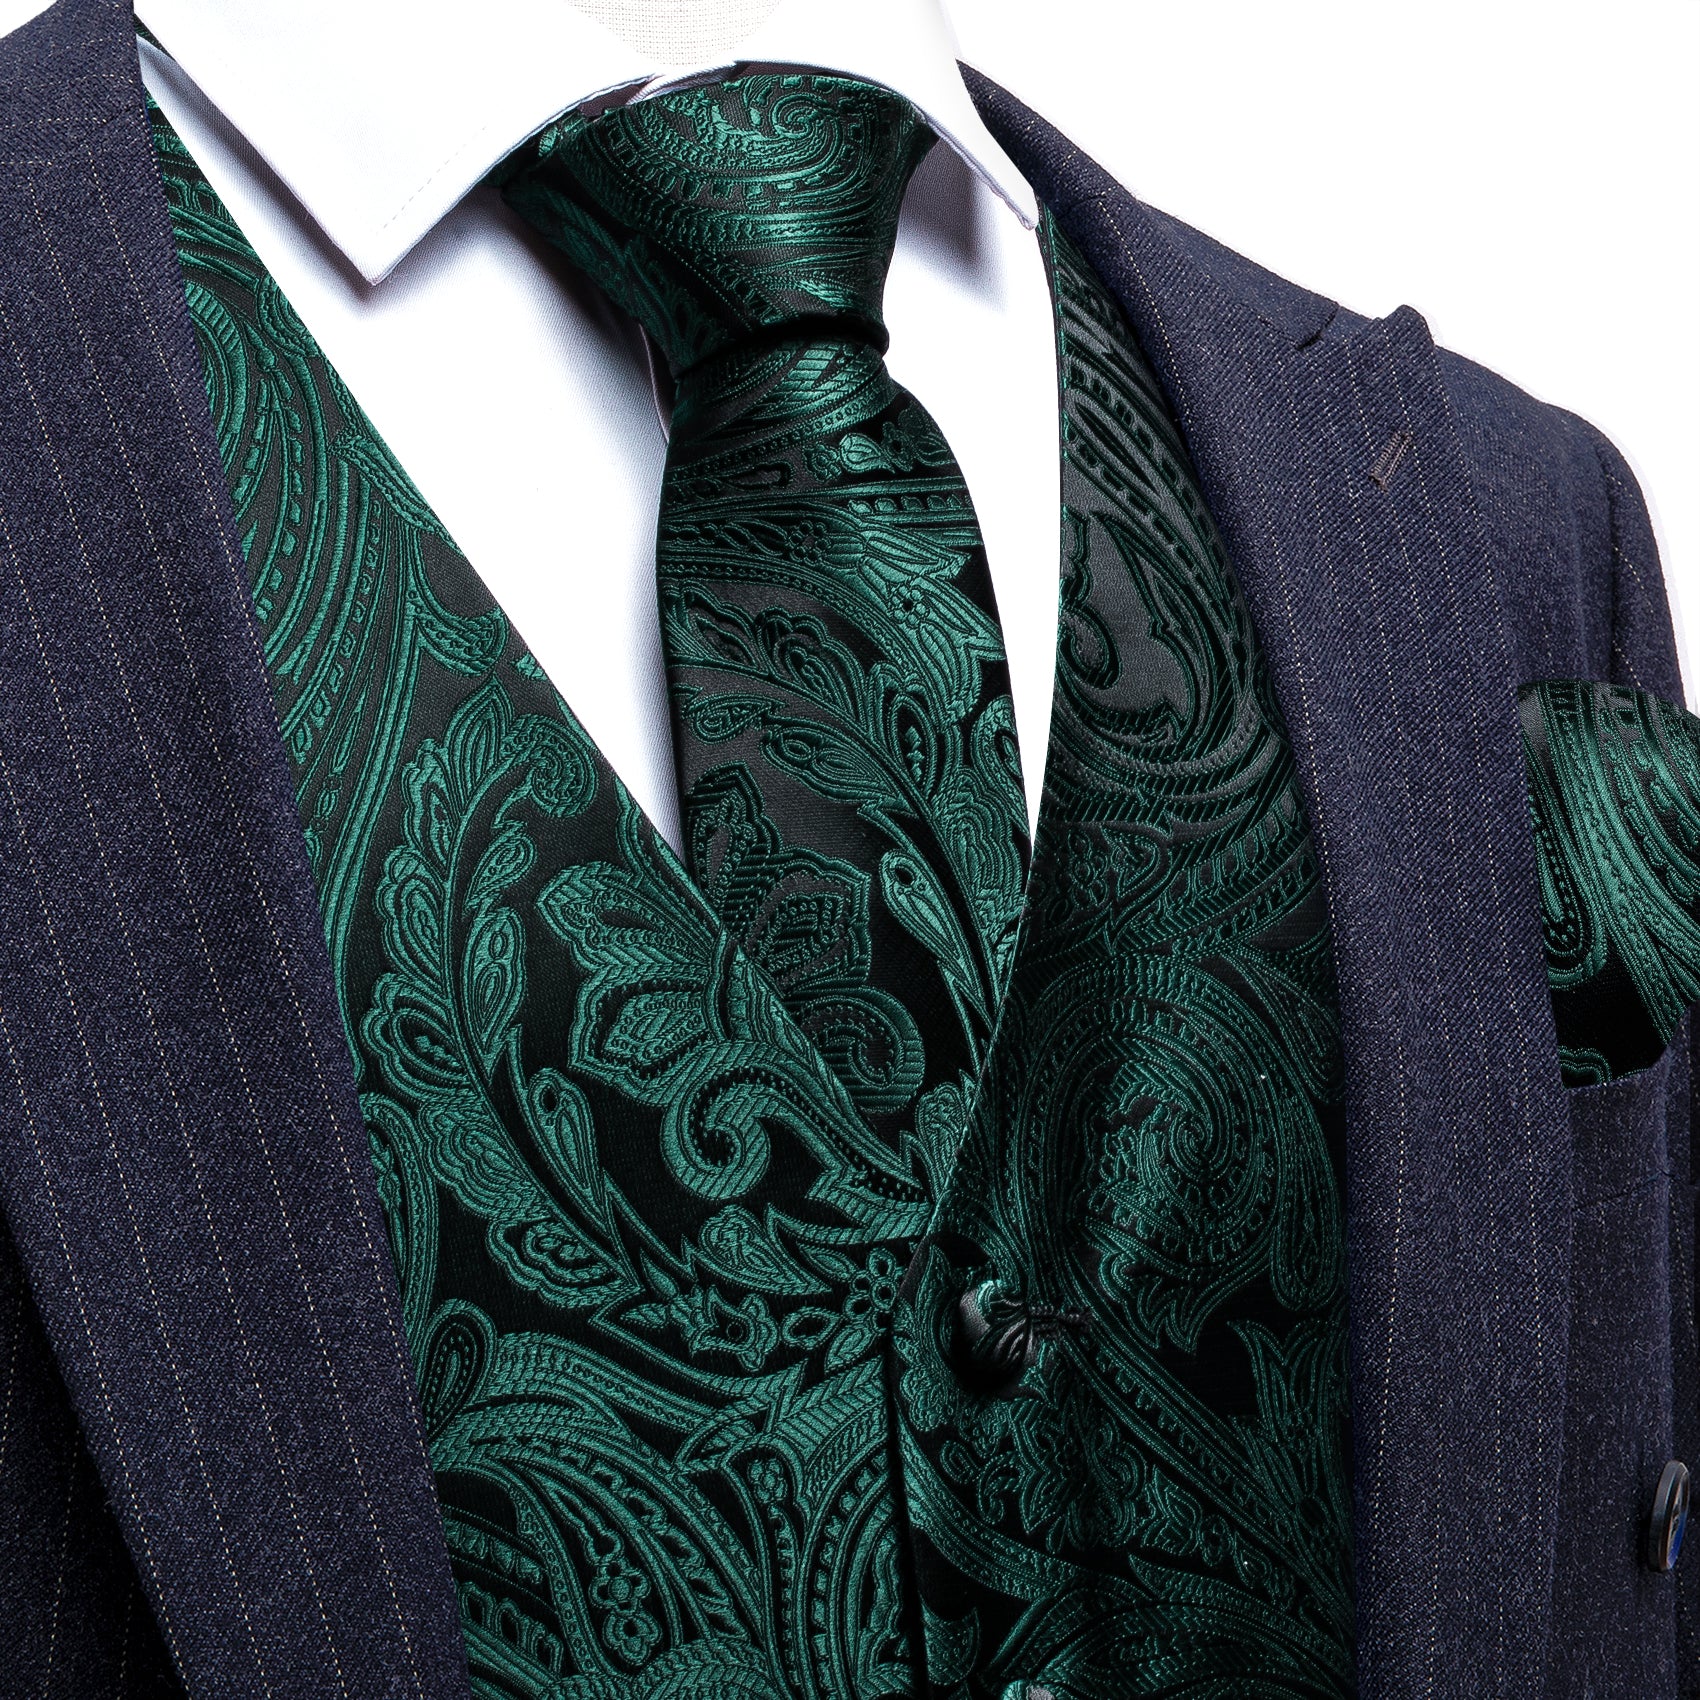 Green Paisley Silk Vest Tie Pocket square Cufflinks Set